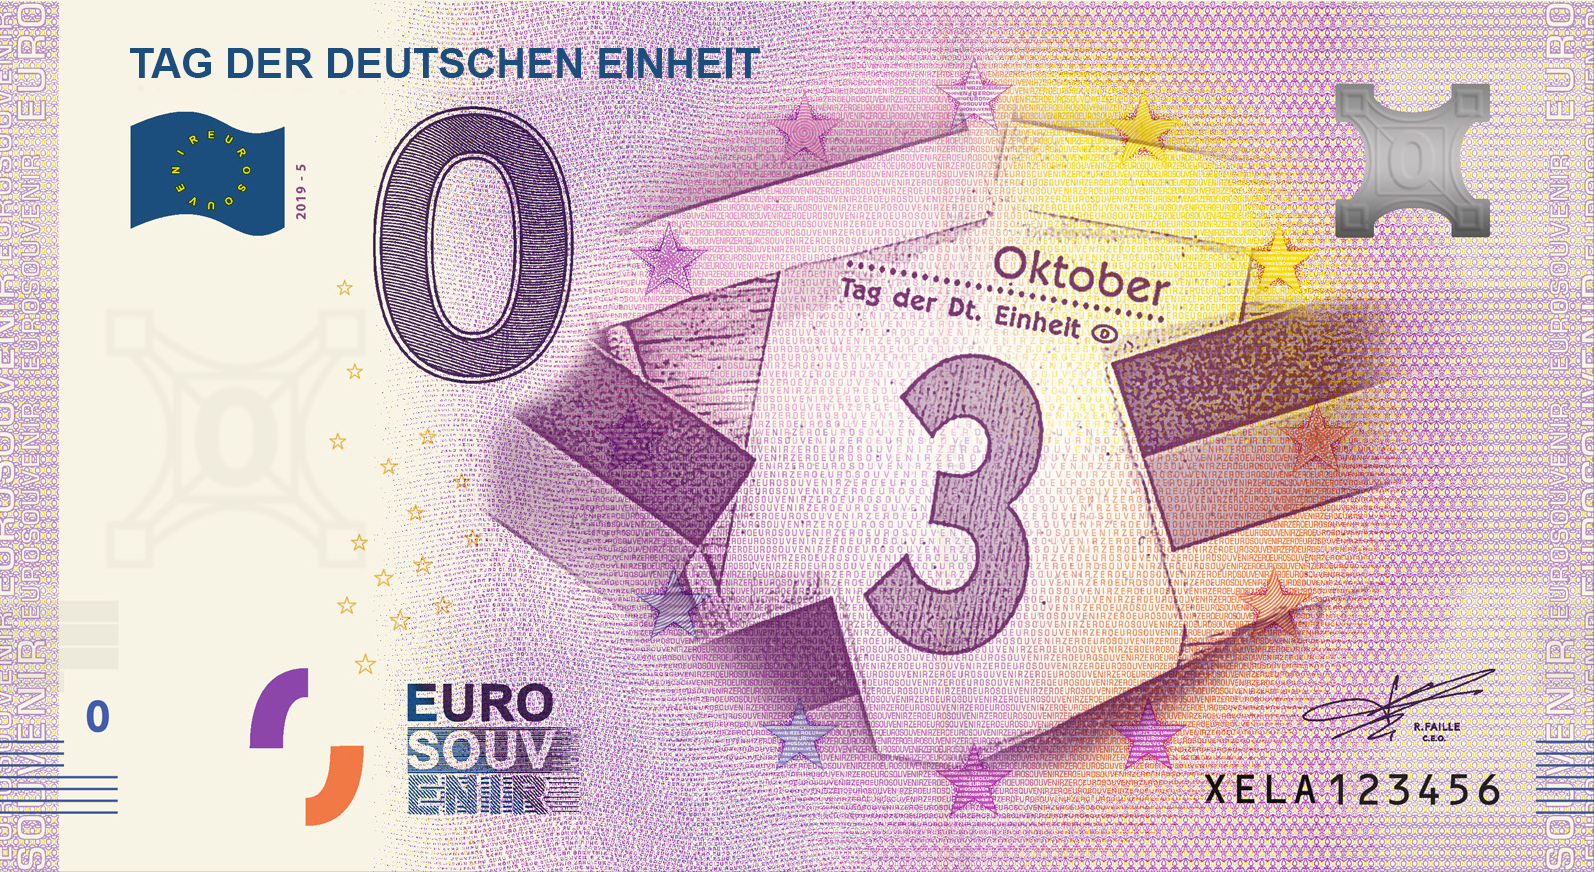 MDM's album of zero euro banknotes - 30 years of German Refunded unity